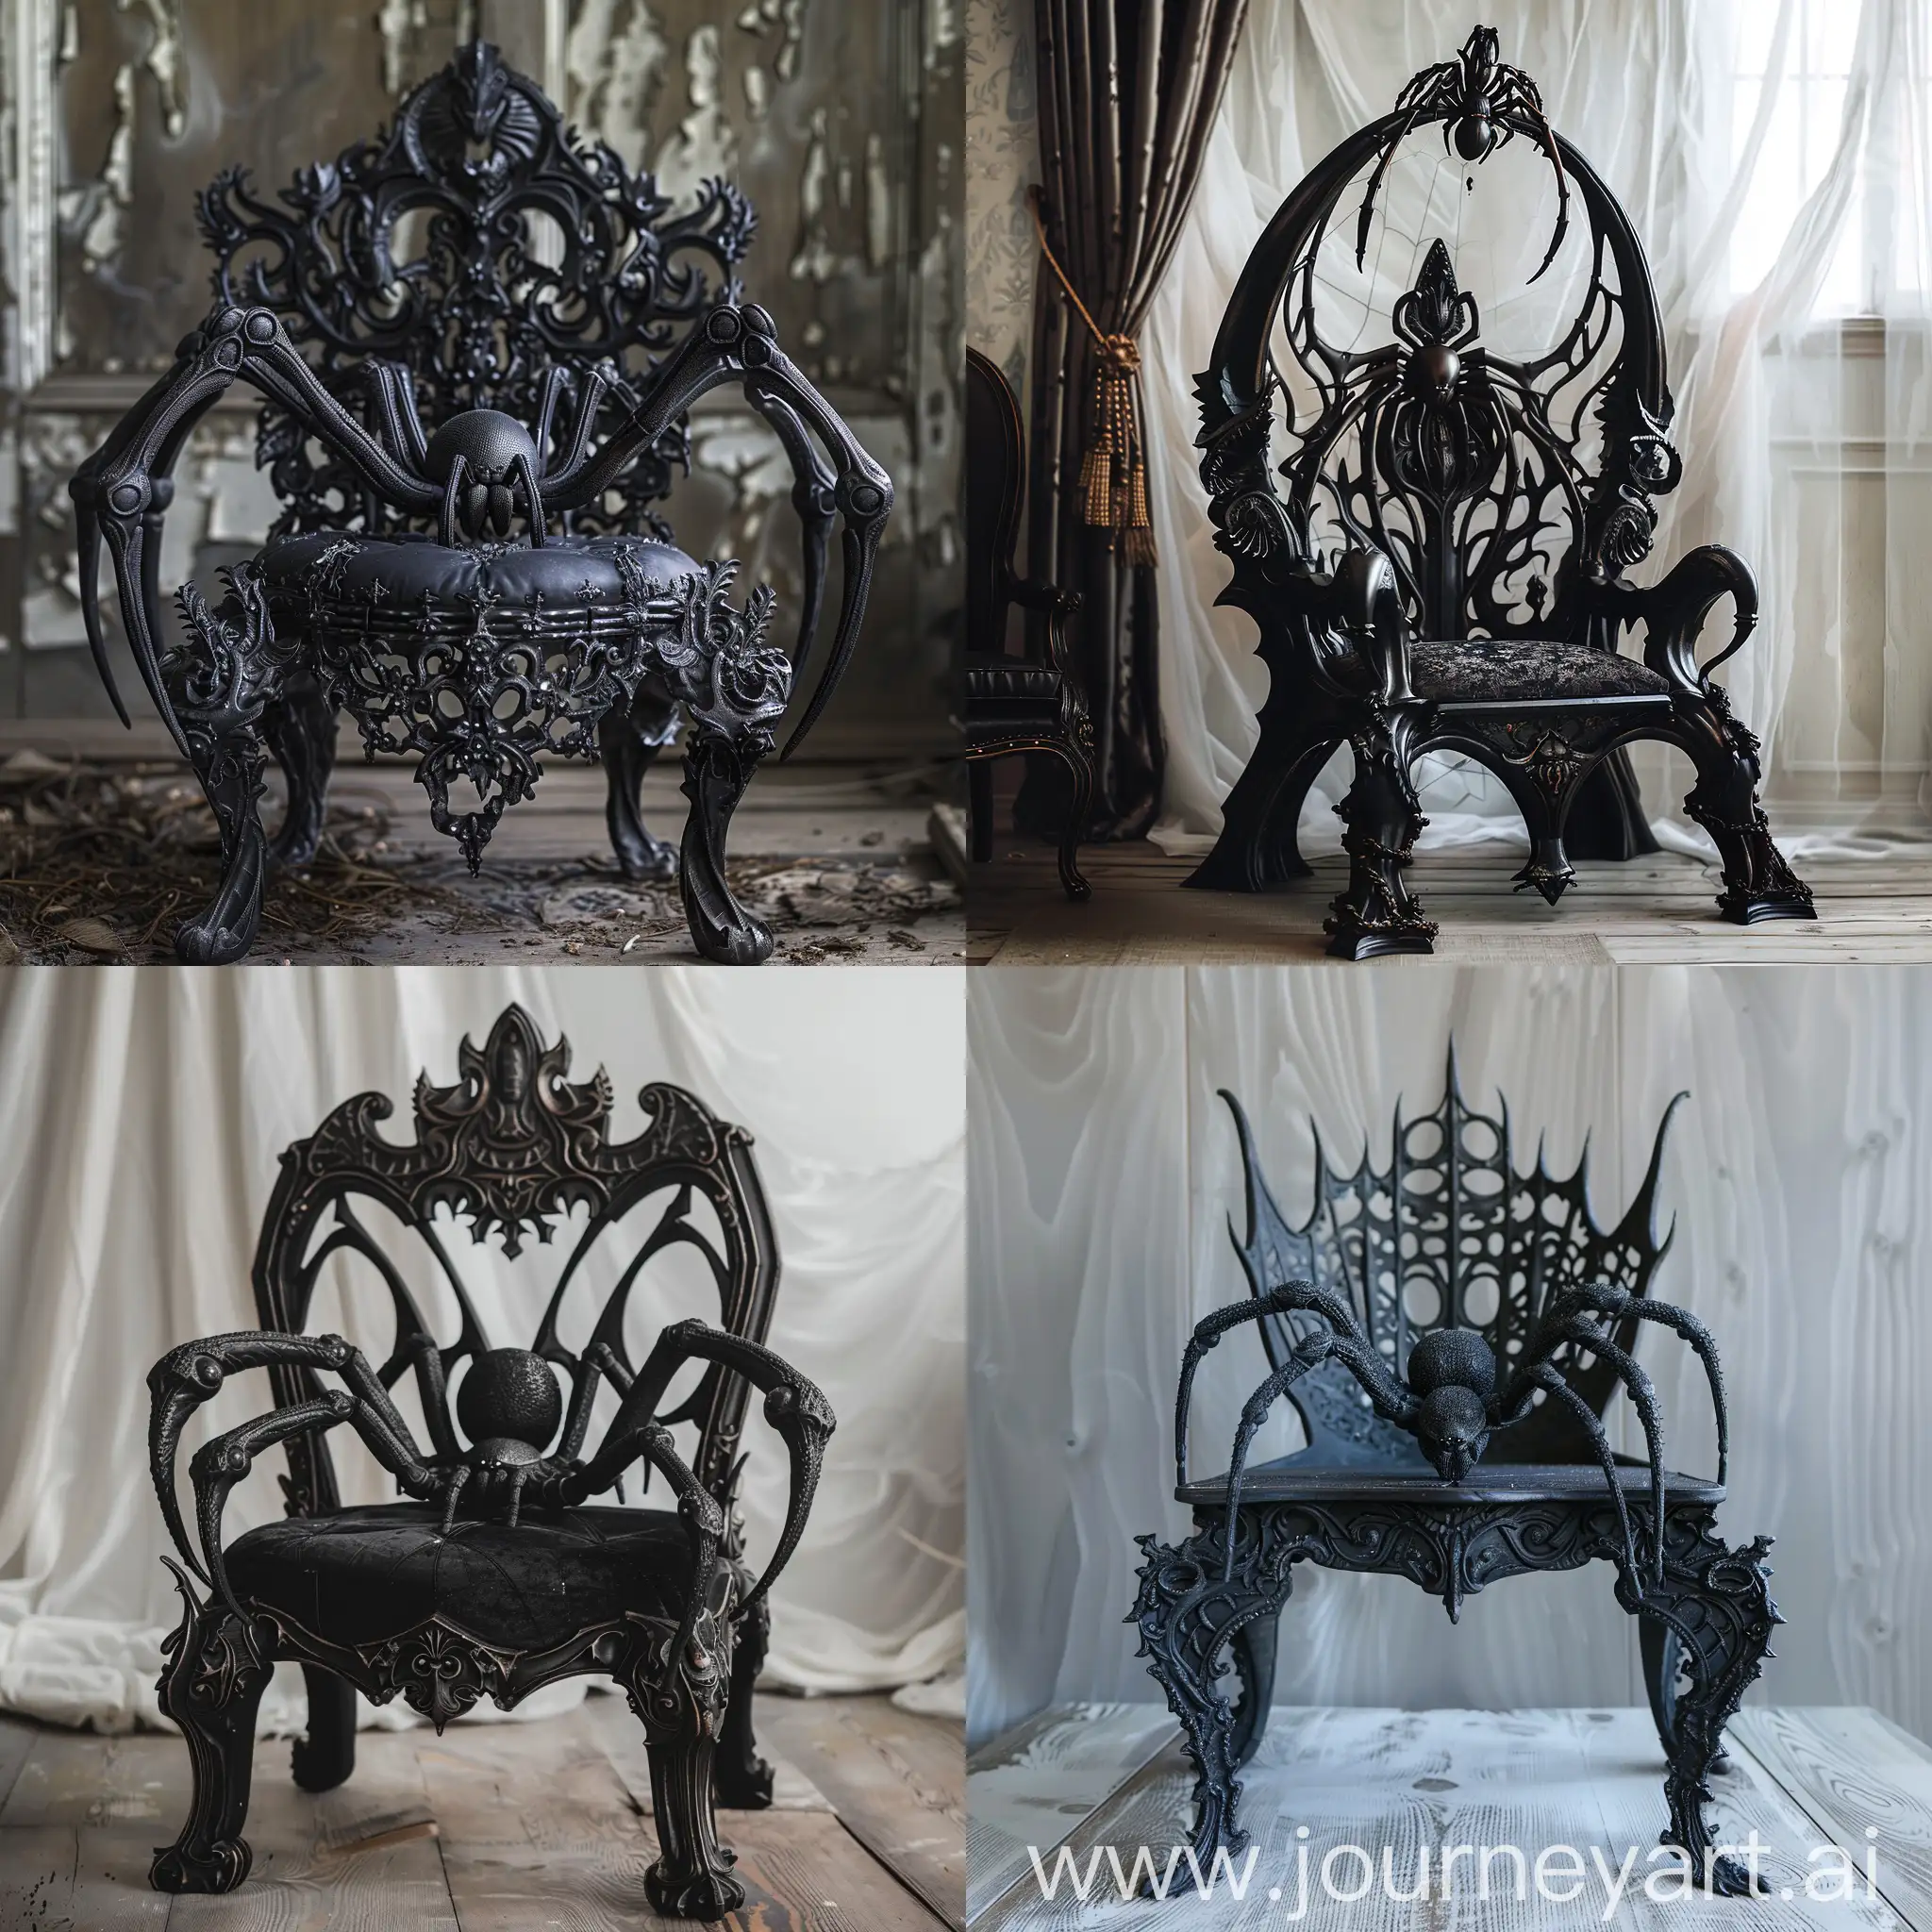 Gothic-Spider-Throne-Art-Intricately-Designed-Seat-with-Arachnid-Motifs